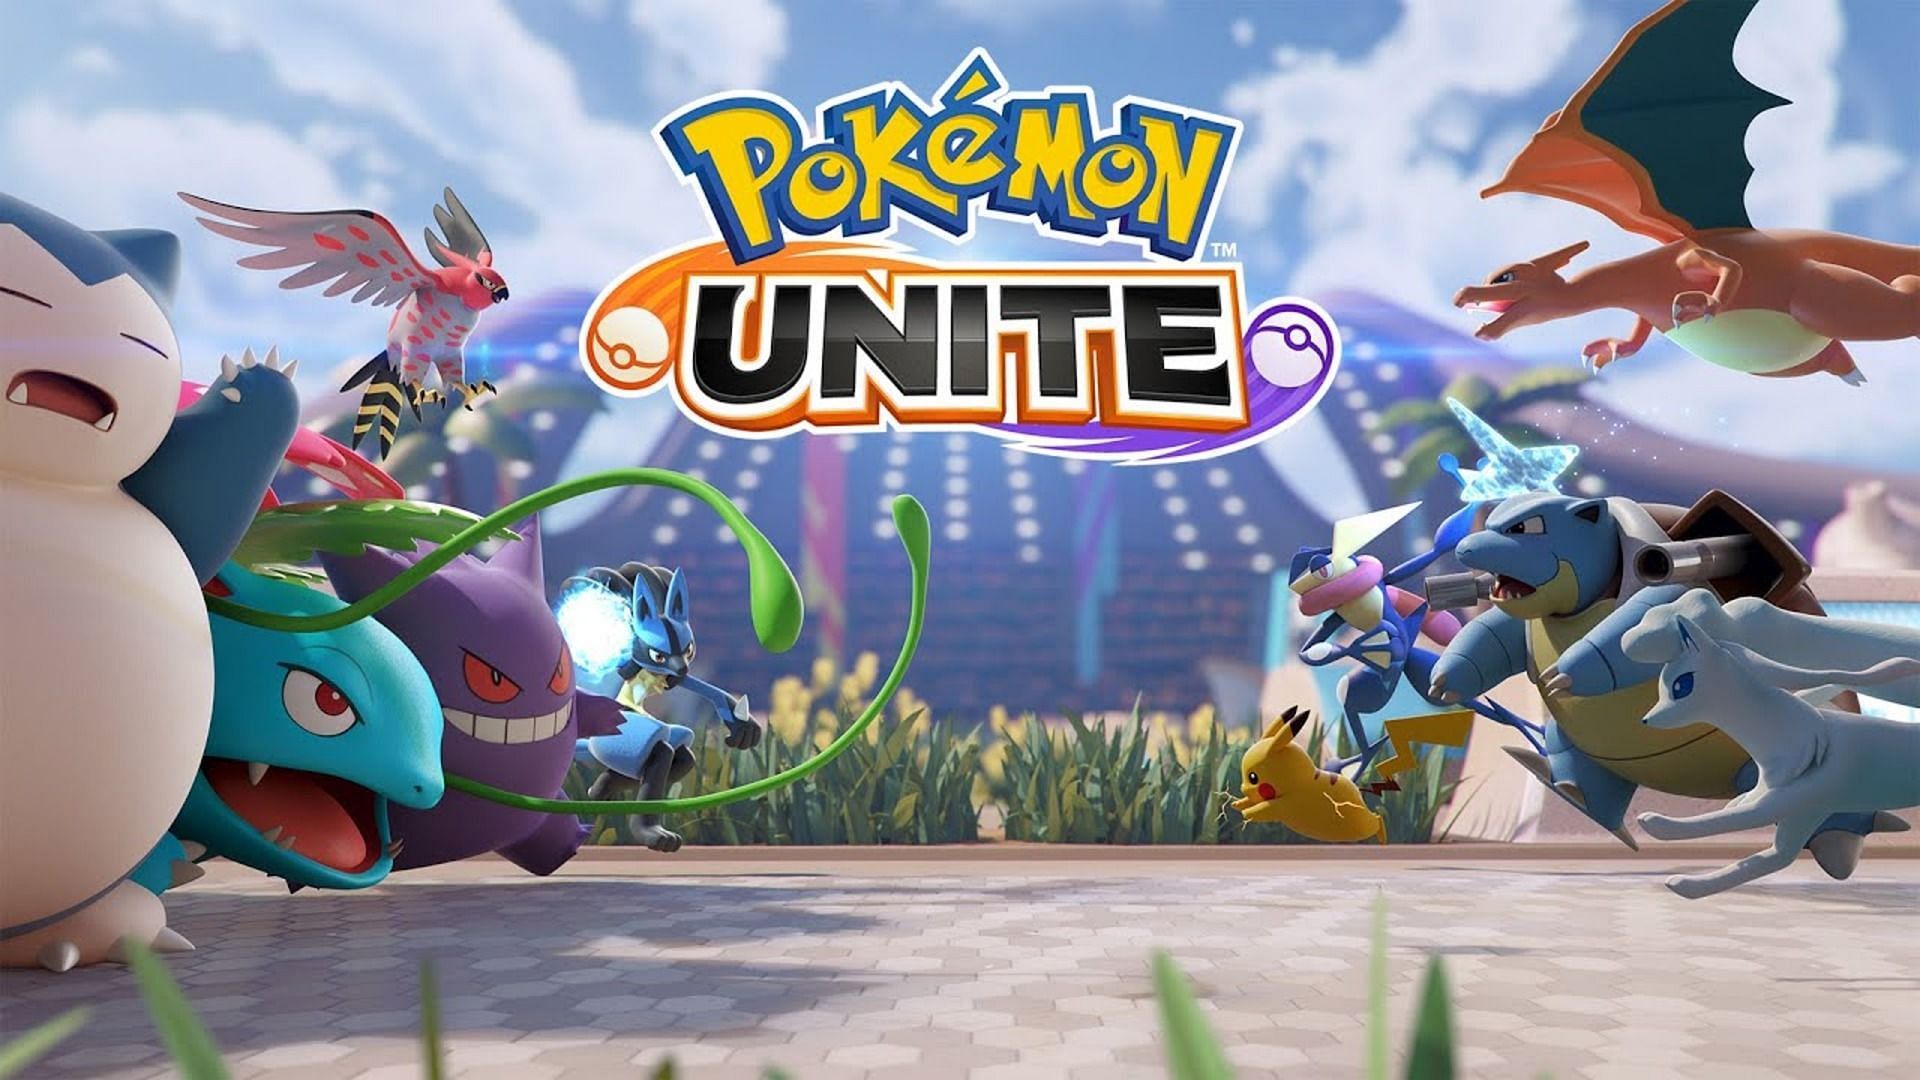 Official imagery for Pokemon Unite (Image via The Pokemon Company)